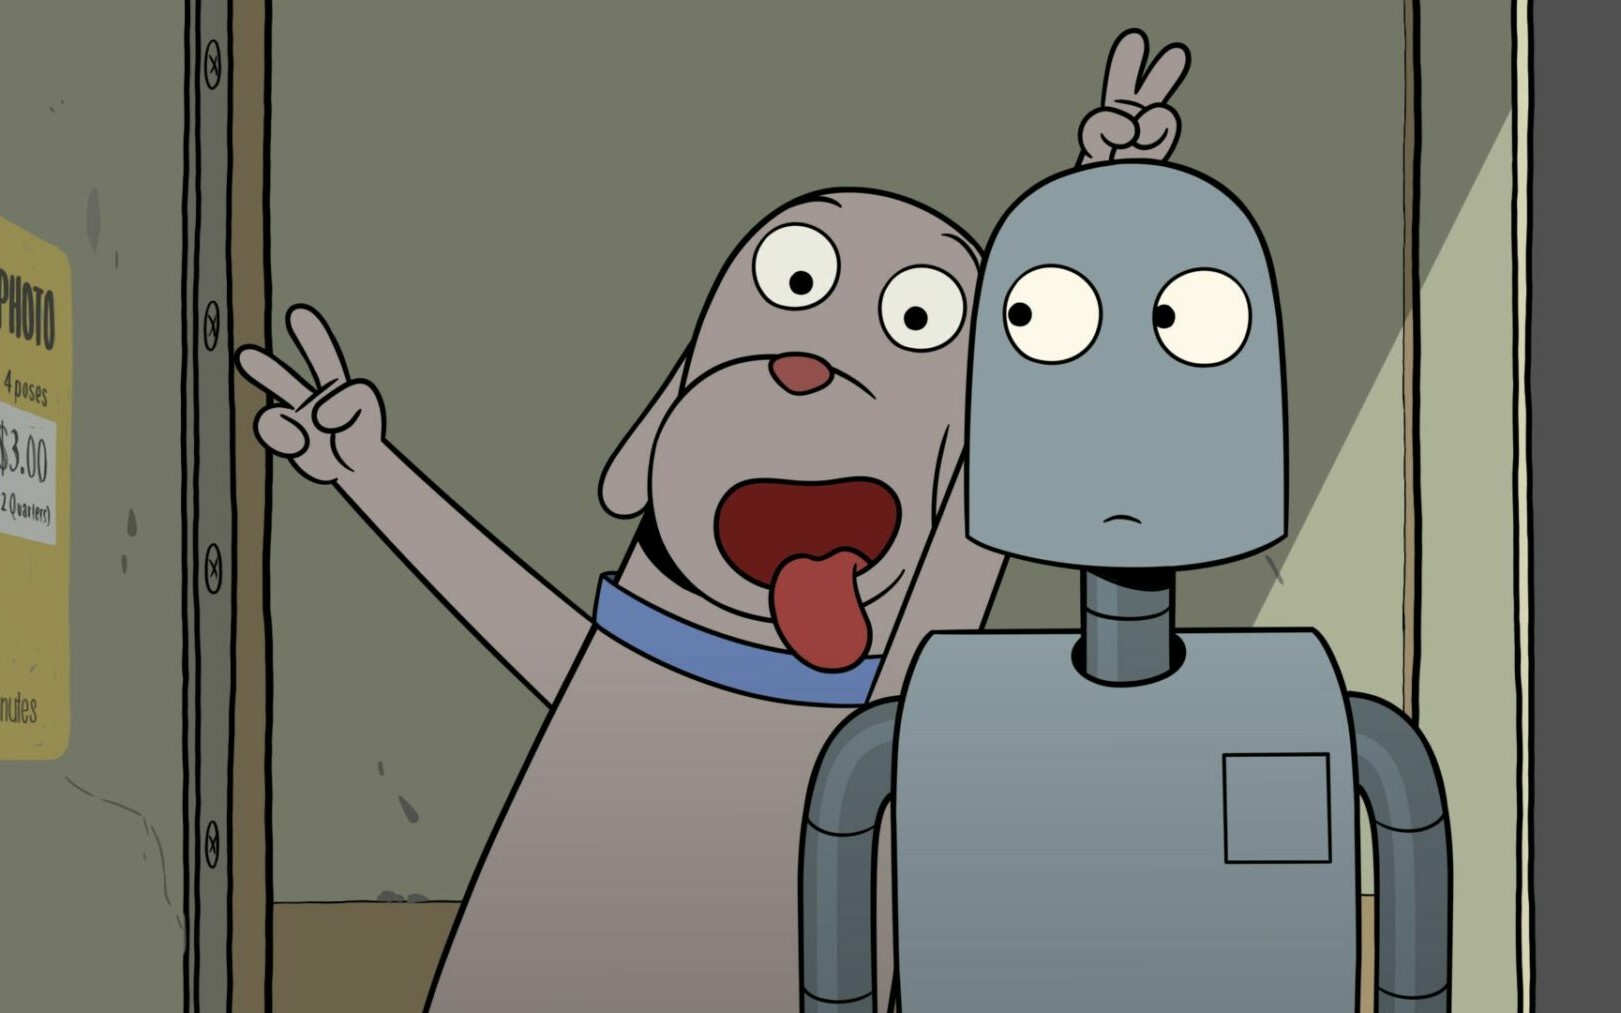 Pies i Robot (2023)